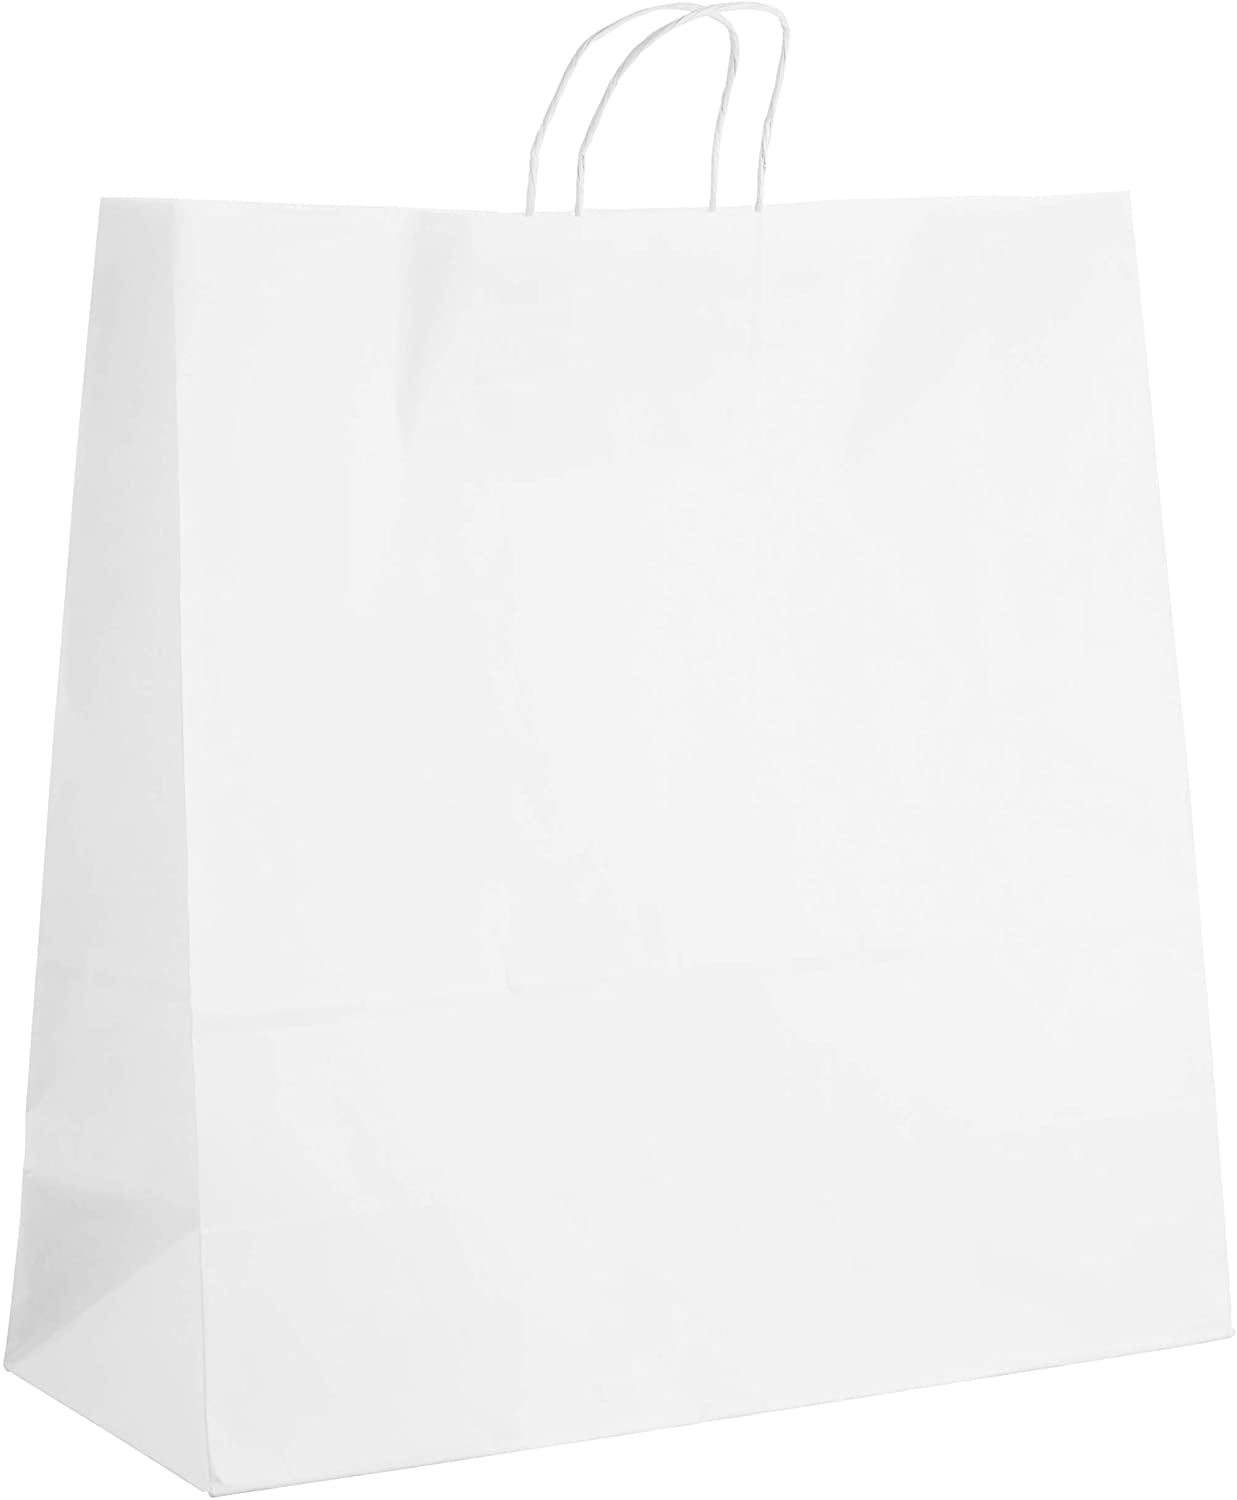 25 bags plastic bags carrier bags Gift Bags White Black kreisgr.14,5x9cm 